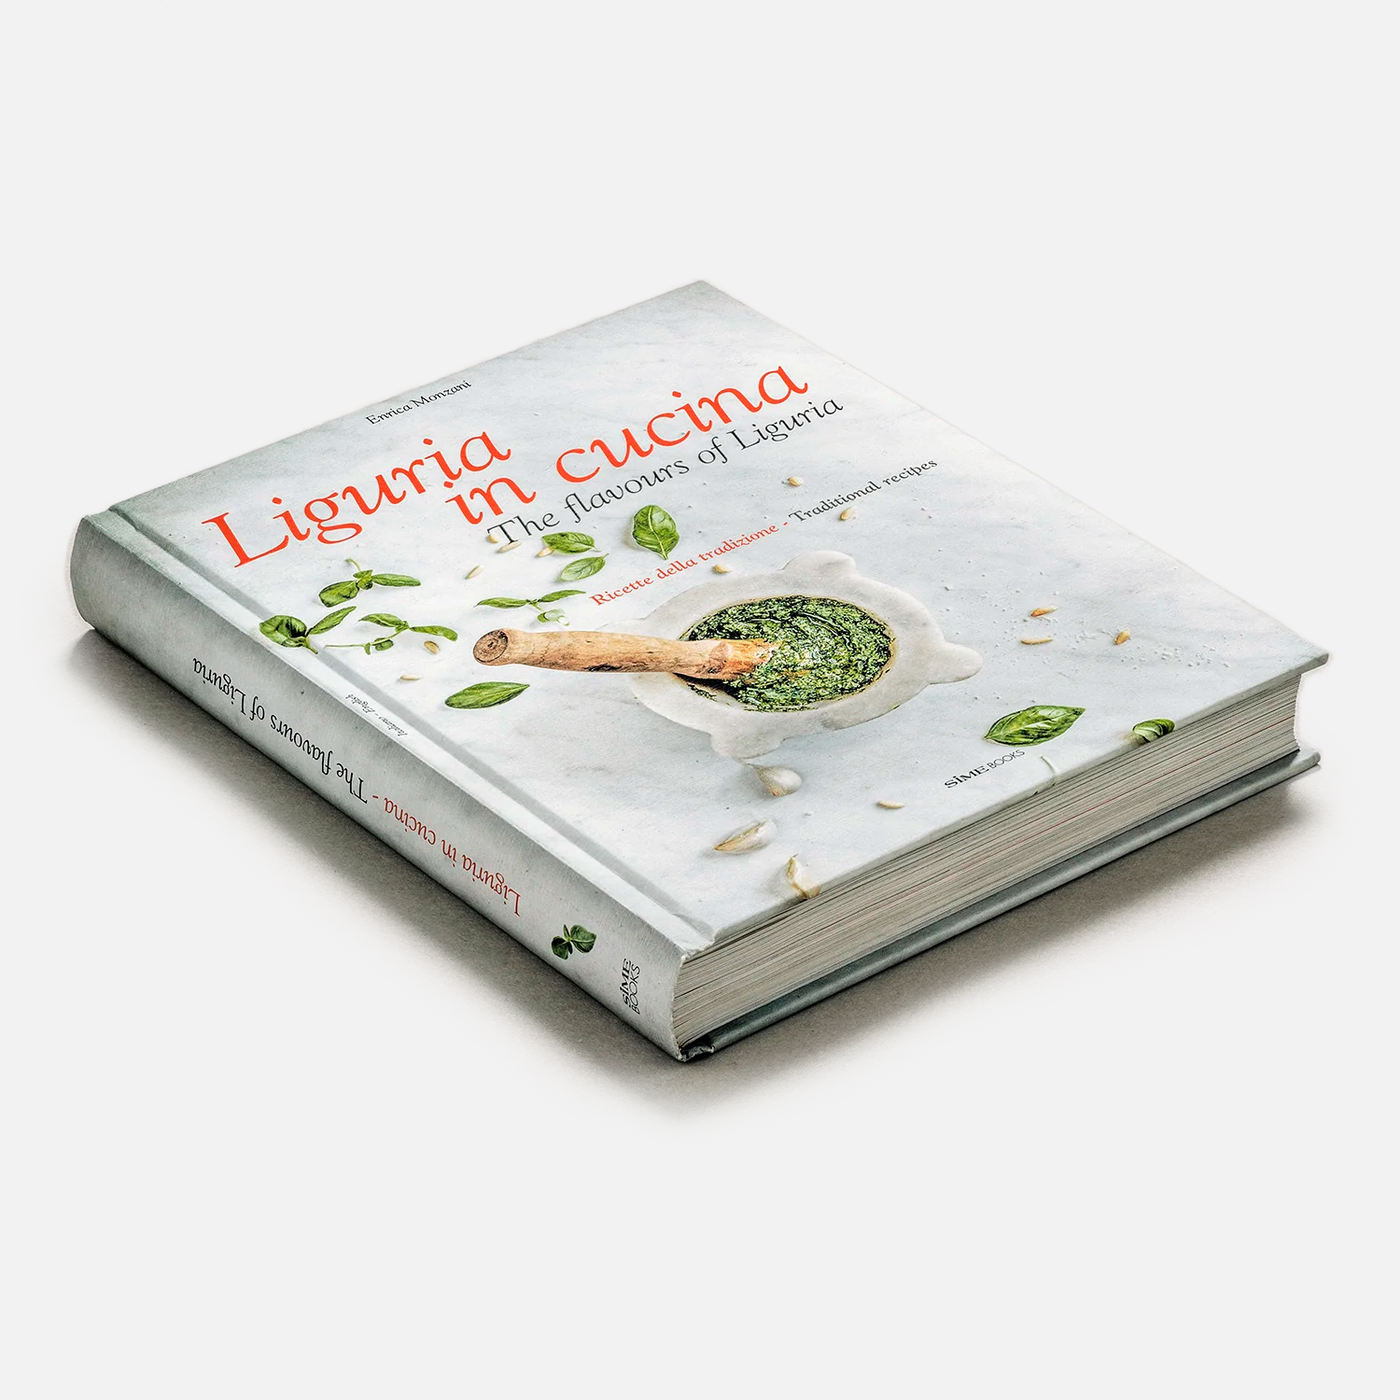 Liguria in Cucina - The flavours of Liguria